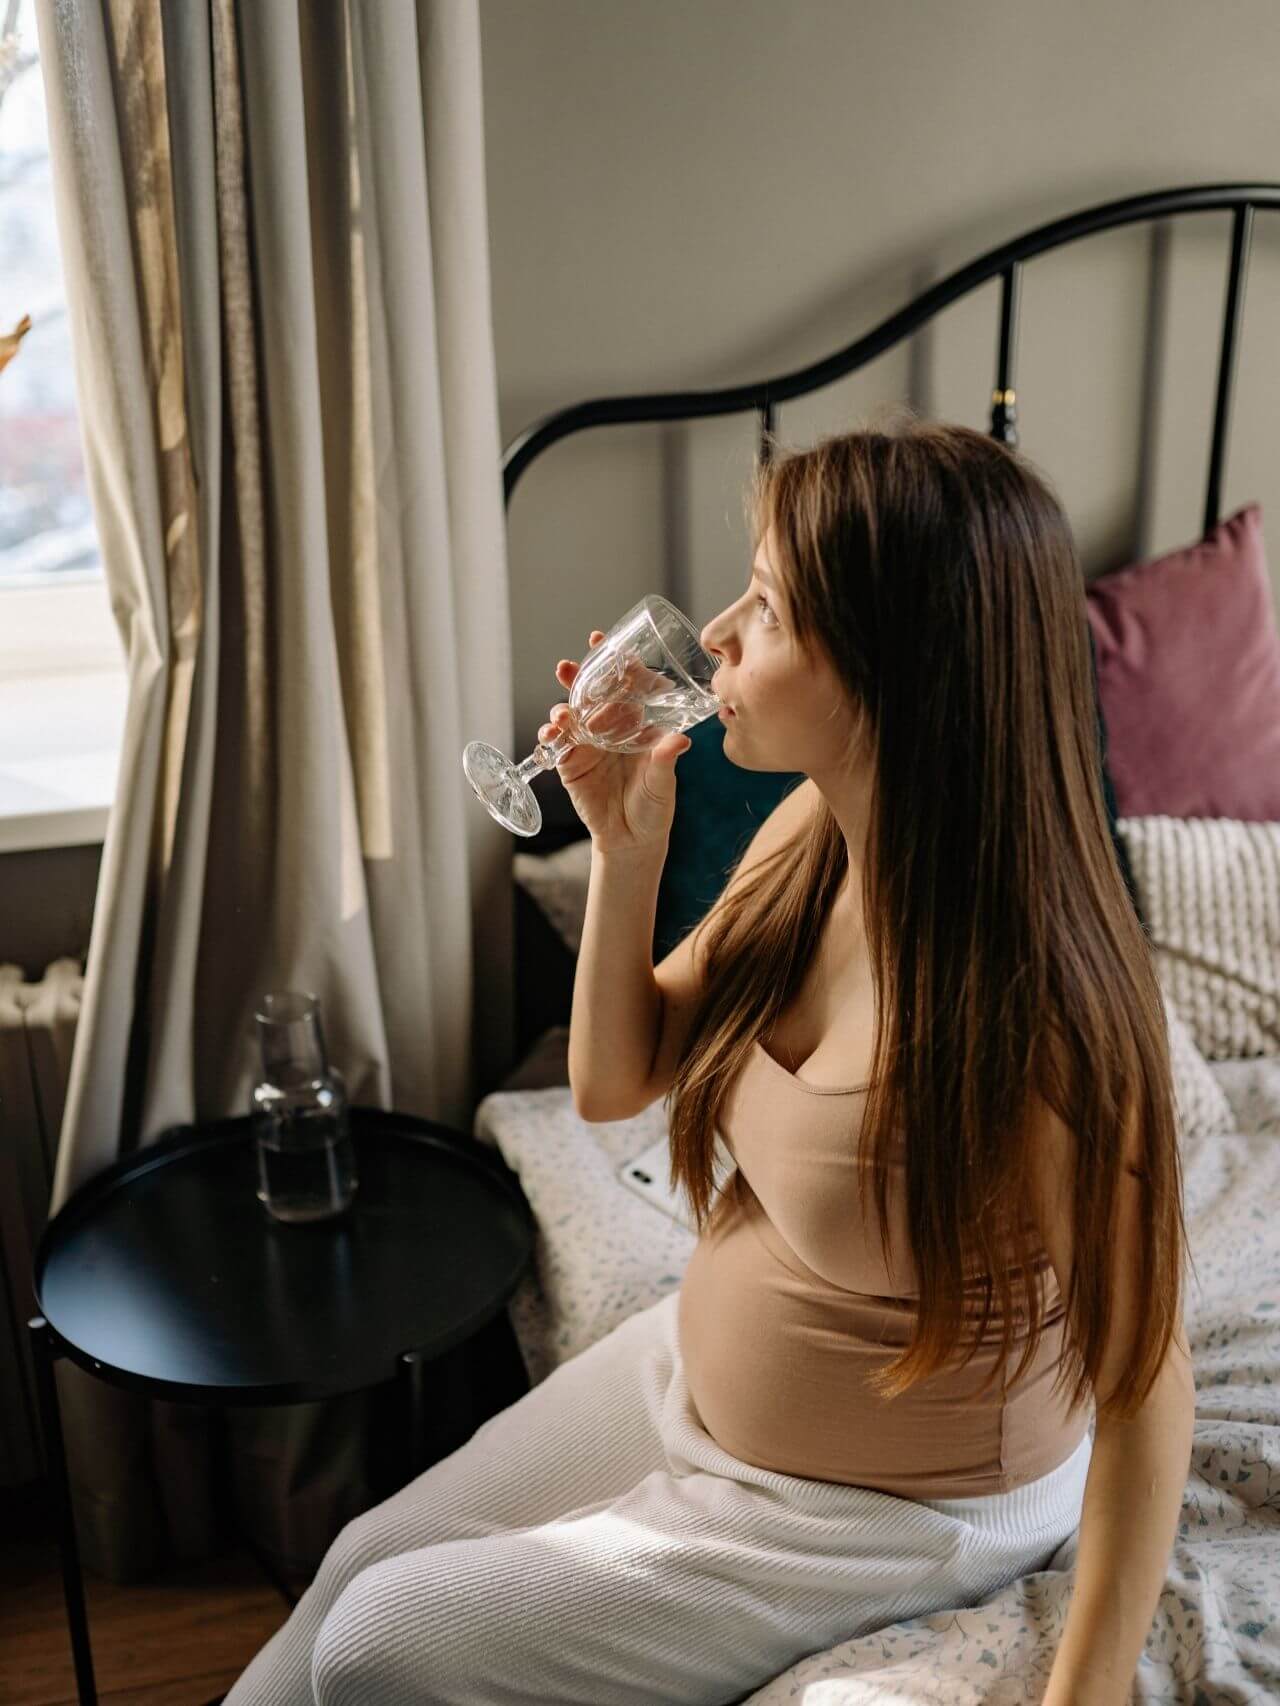 Importancia De Beber Agua Durante El Embarazo Eres Mamá 9889